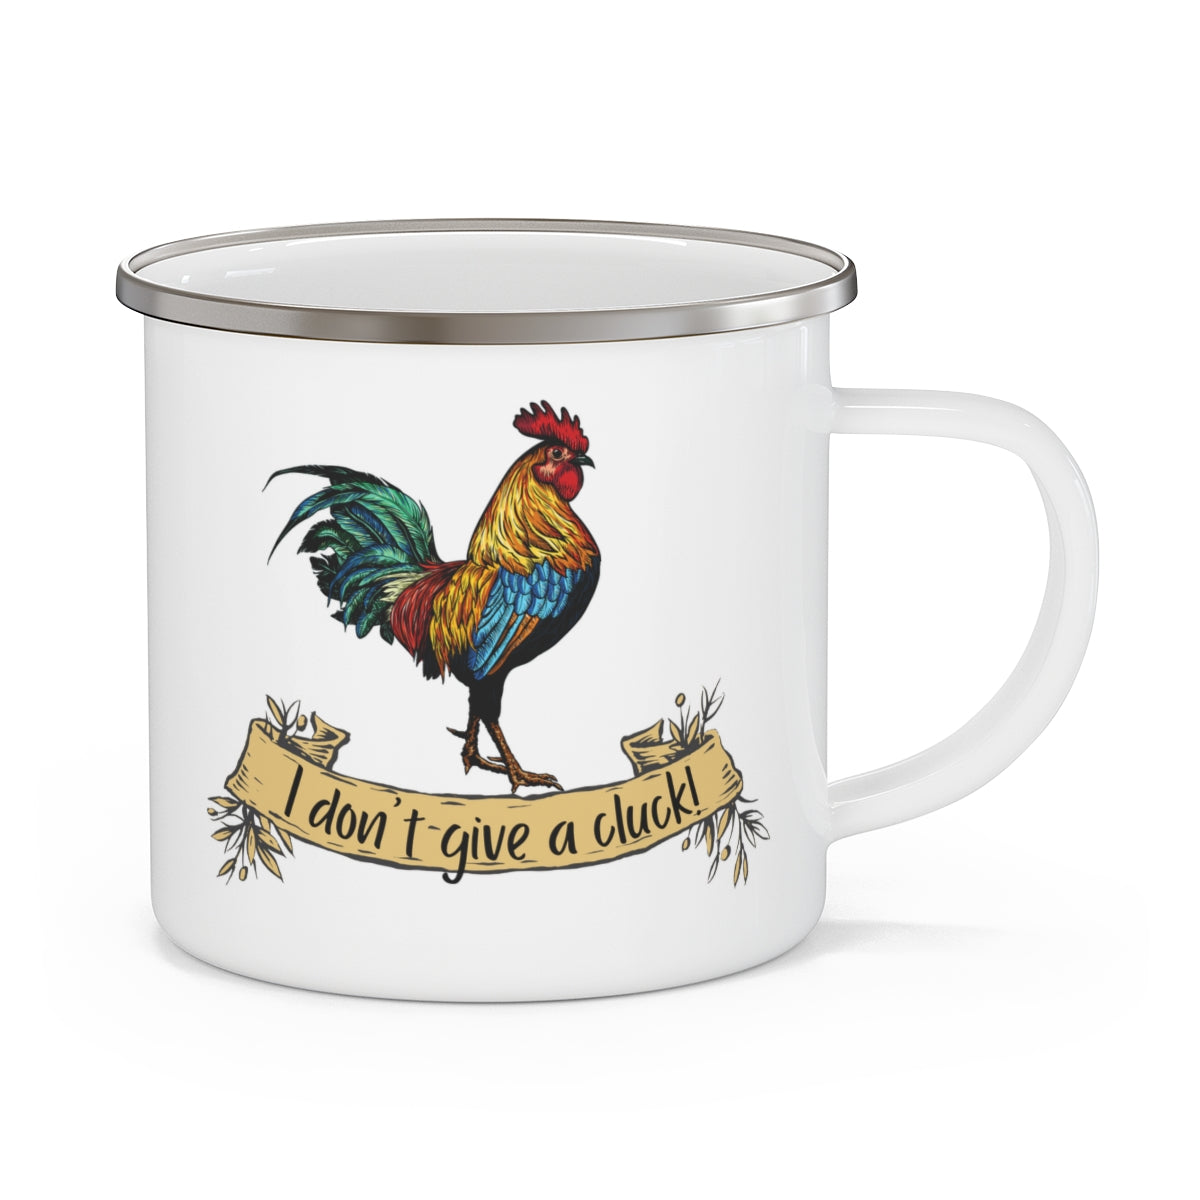 I don't give a cluck! -  Enamel Mug